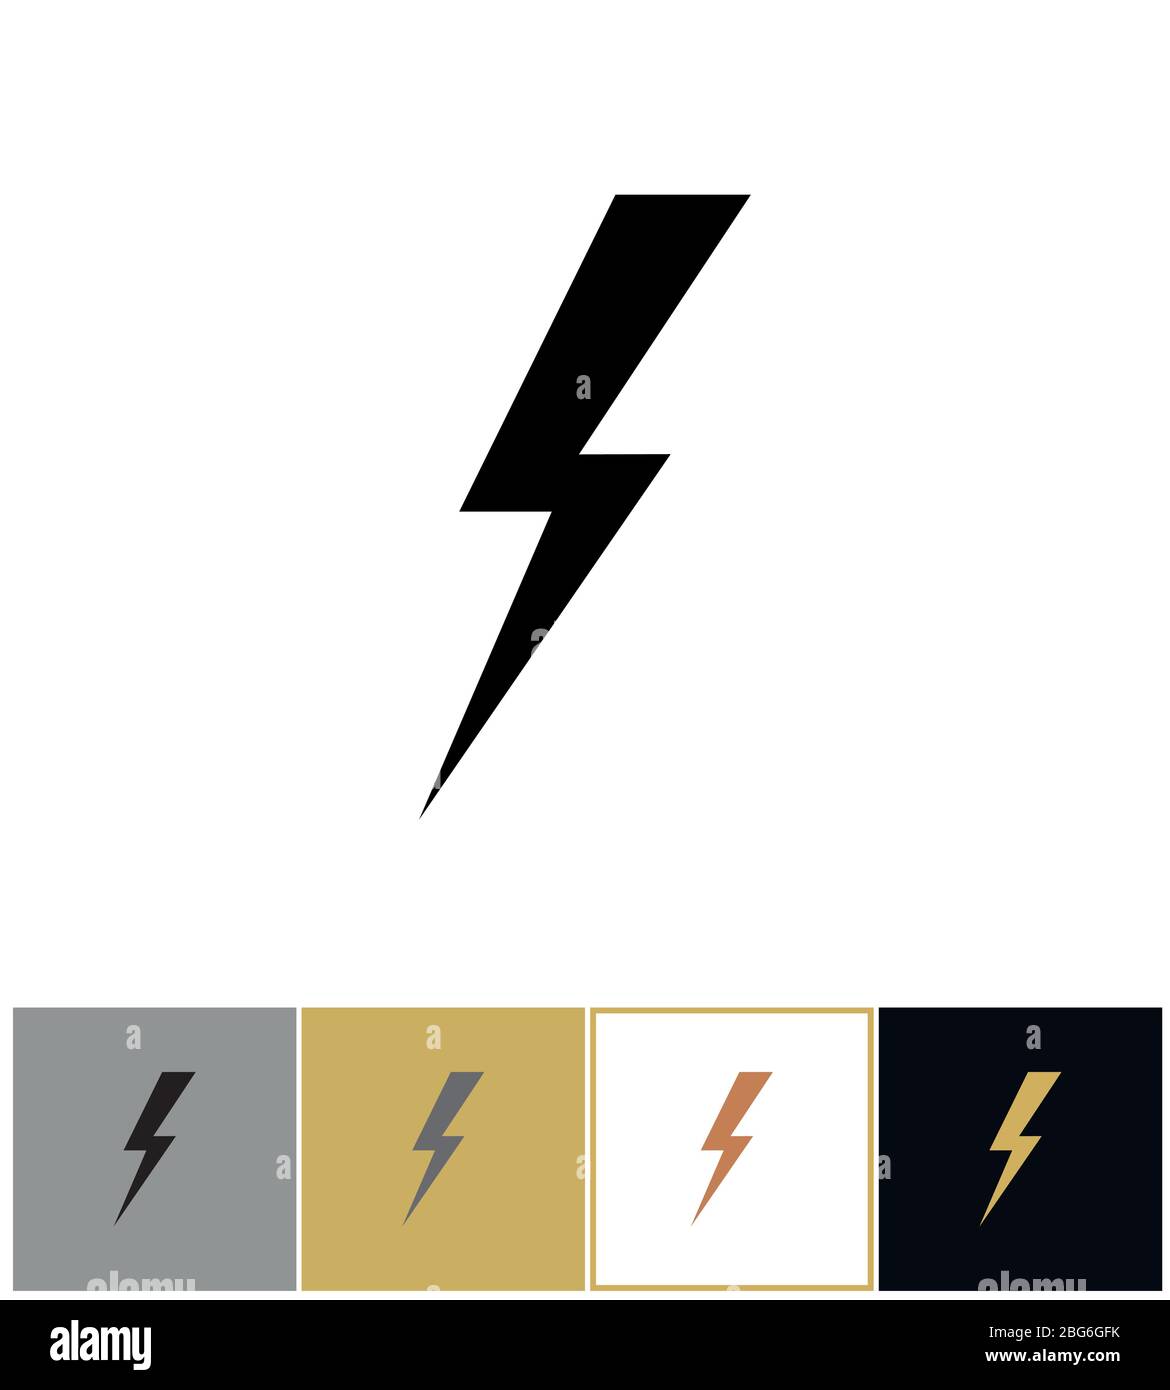 Lightning icon, flash or blitz pictogram on gold, black and white